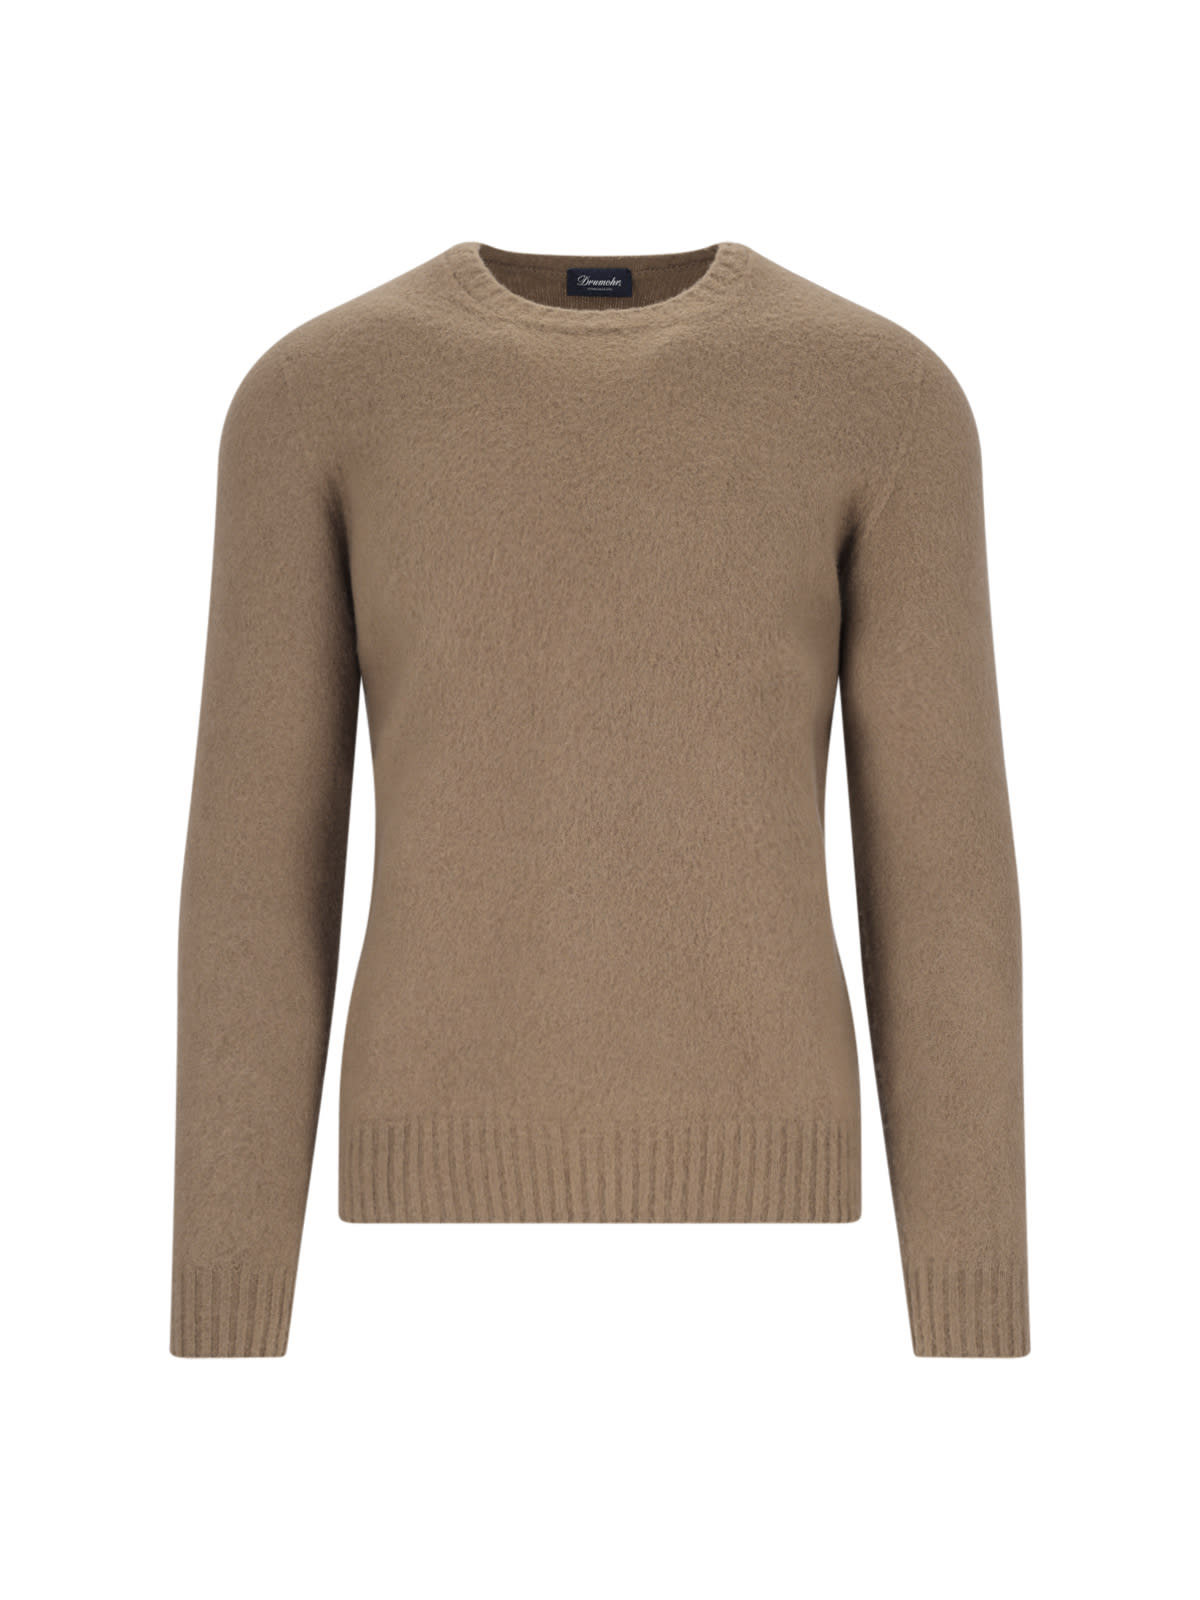 Shop Drumohr Classic Sweater In Brown